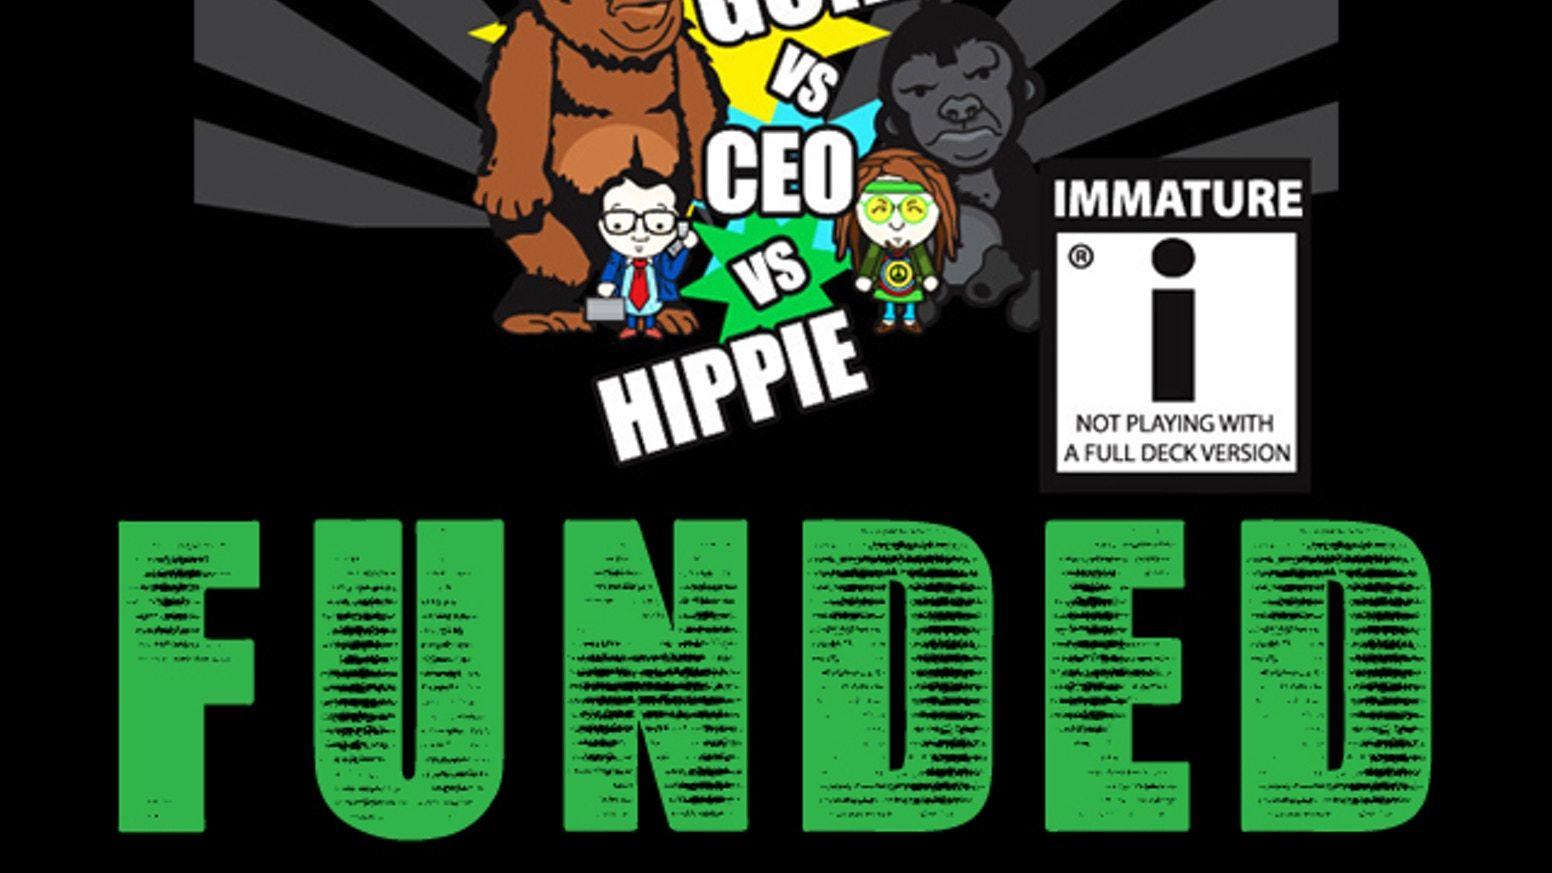 Fun Hippie Logo - Bear vs Gorilla vs CEO vs Hippie NEW half deck by Brian Motter ...